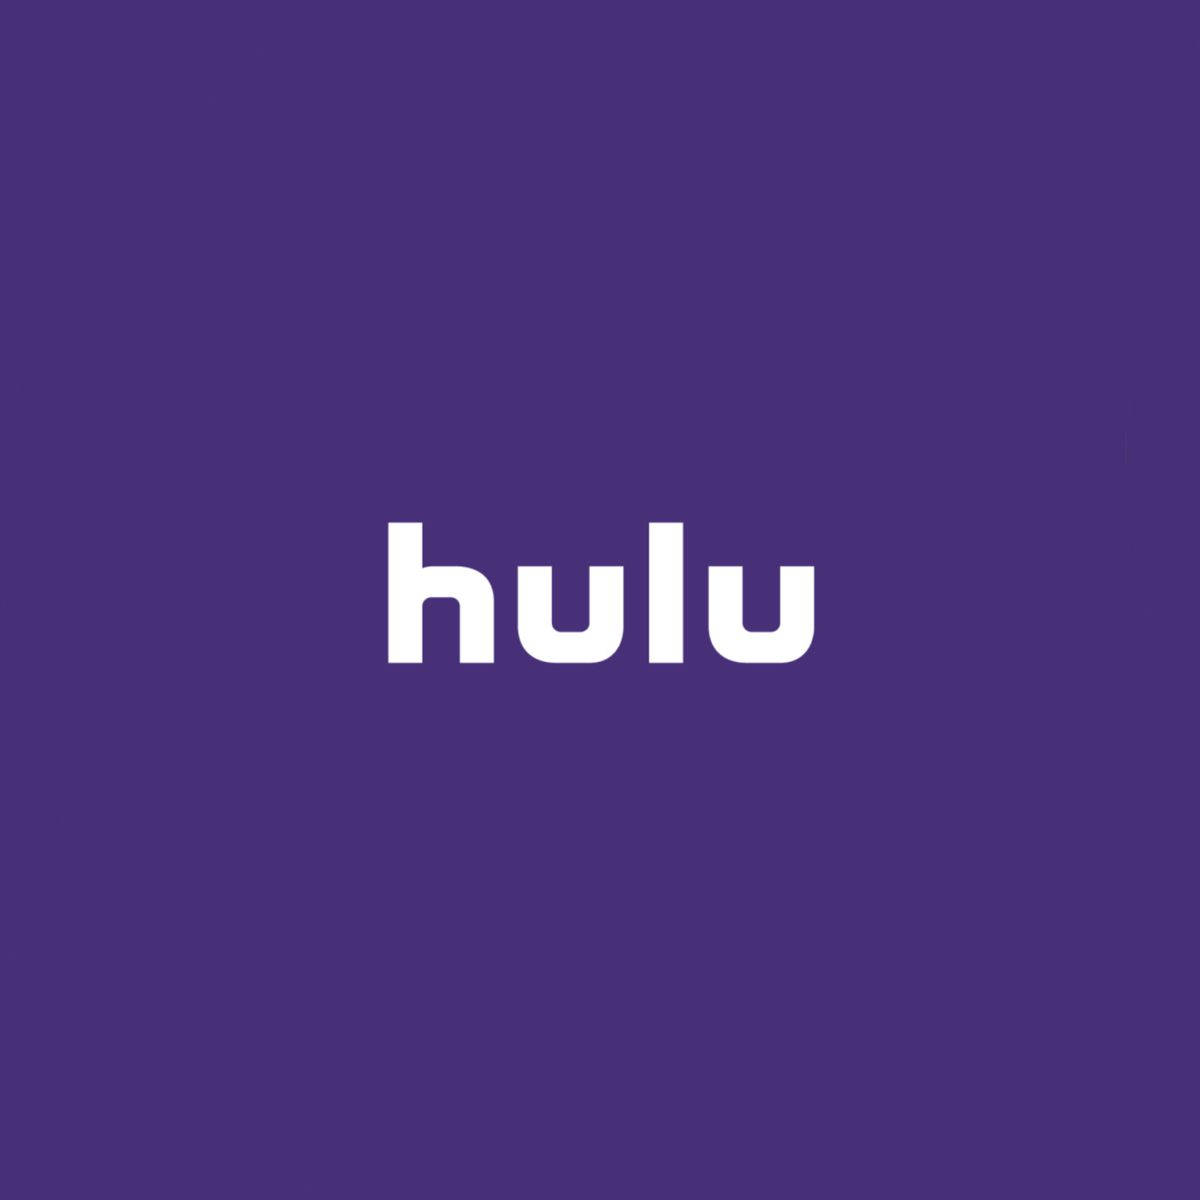 Hulu Violet Aesthetic Background